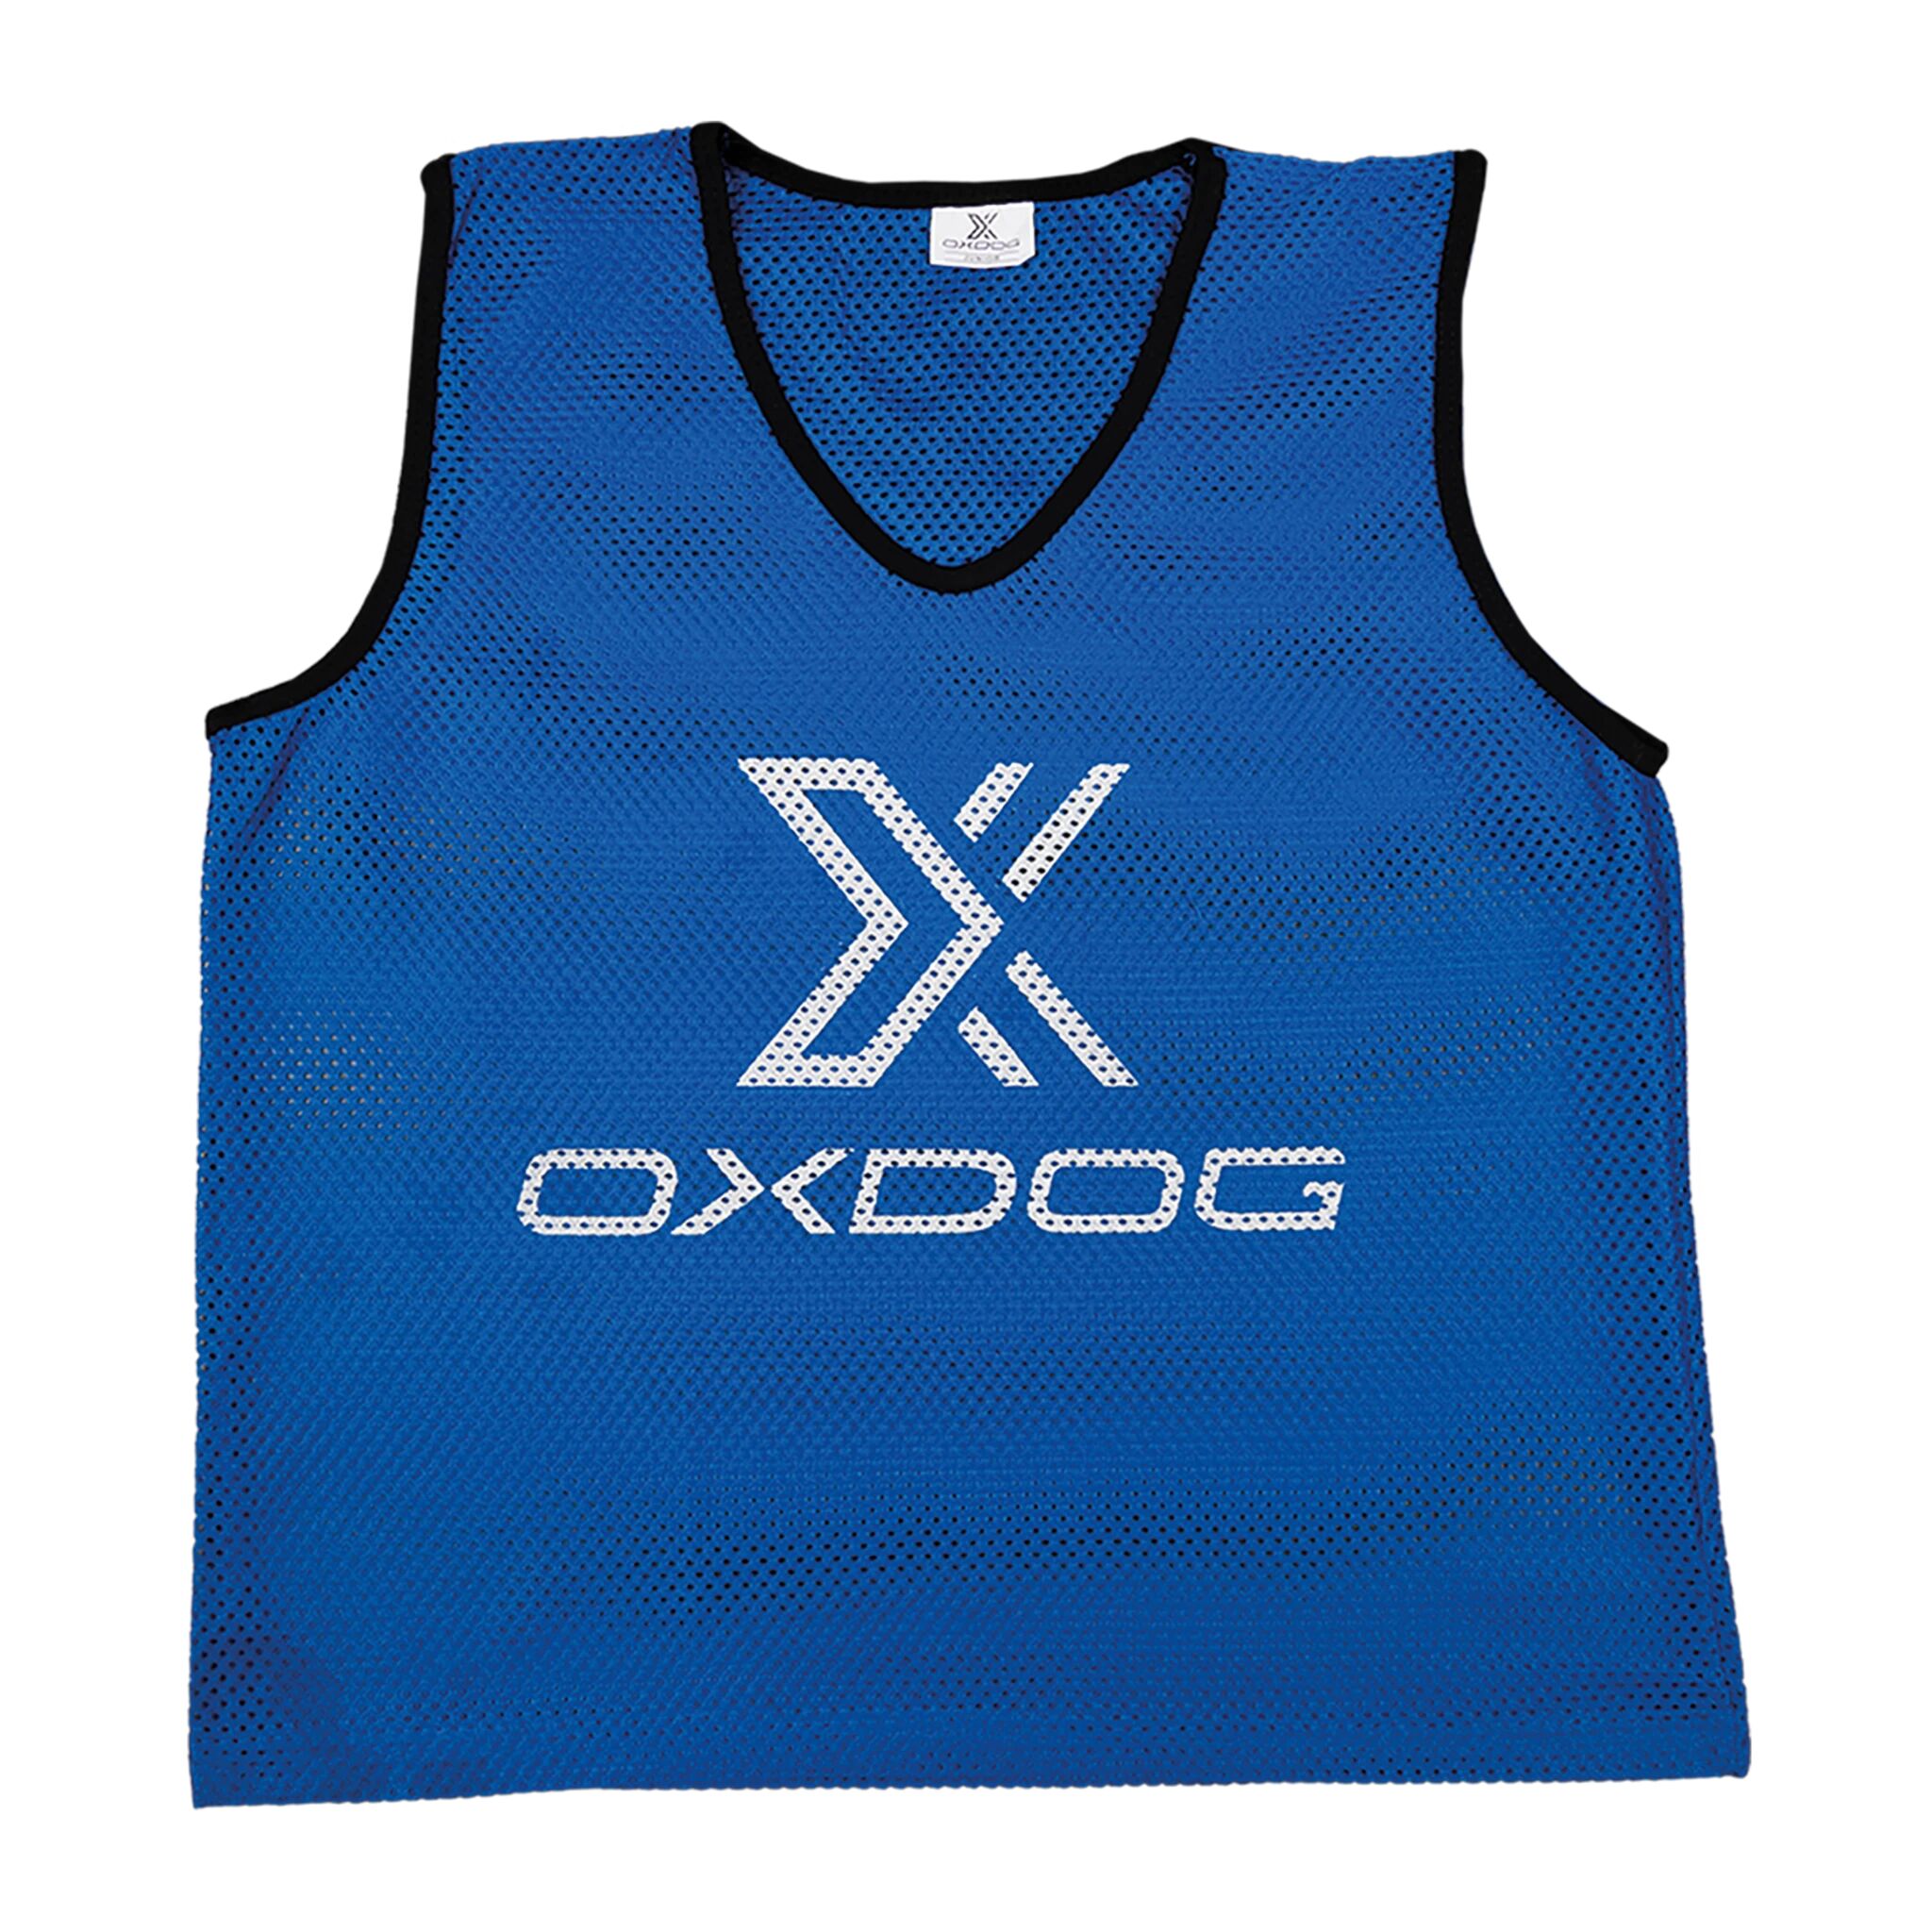 Oxdog 2021 OX1 Training vest JR 5pcs, treningsvester junior One Size blue